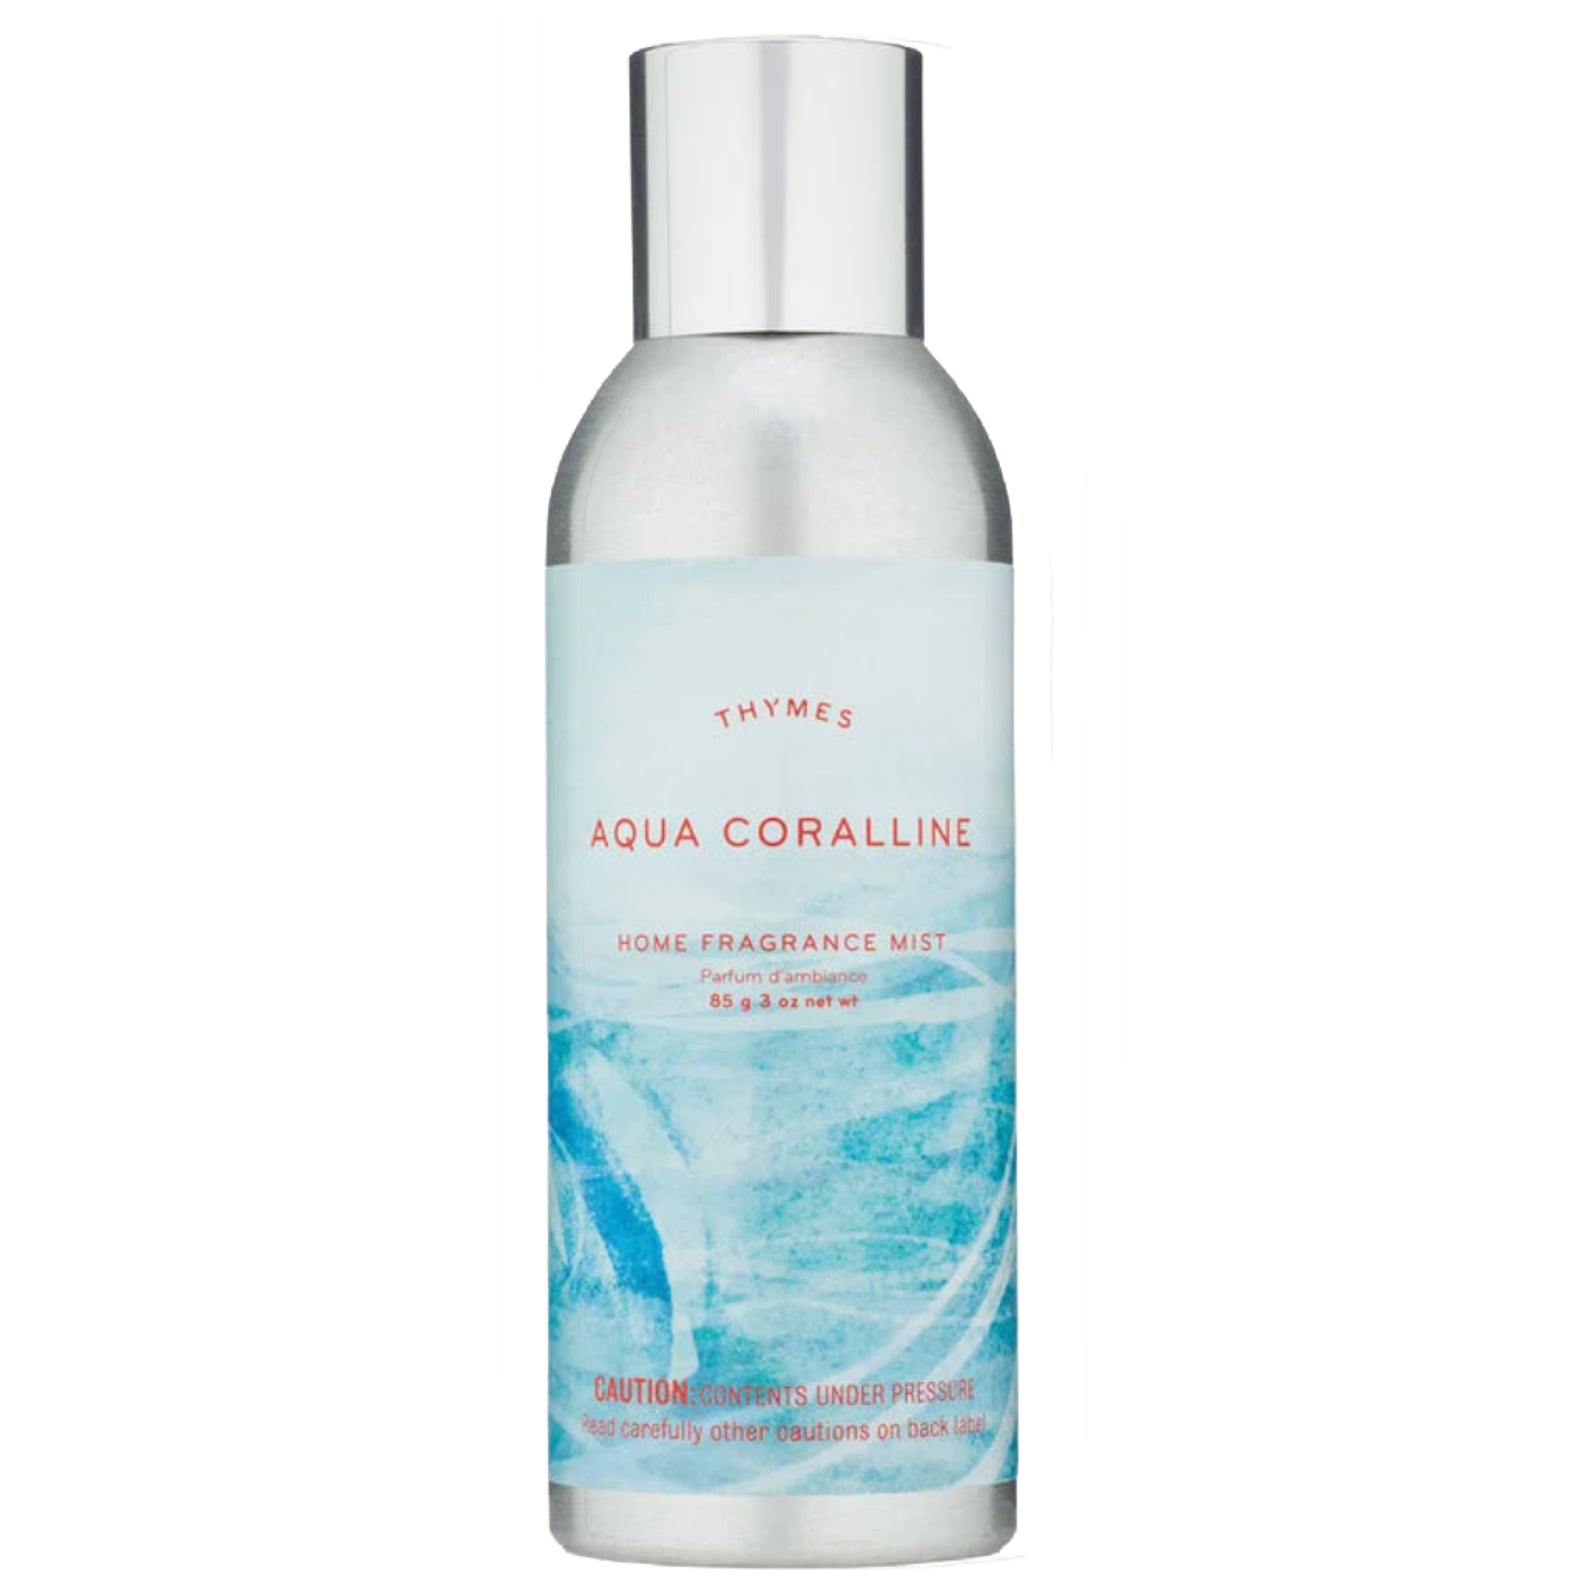 Thymes Aqua Coralline Home Fragrance Mist – 3oz